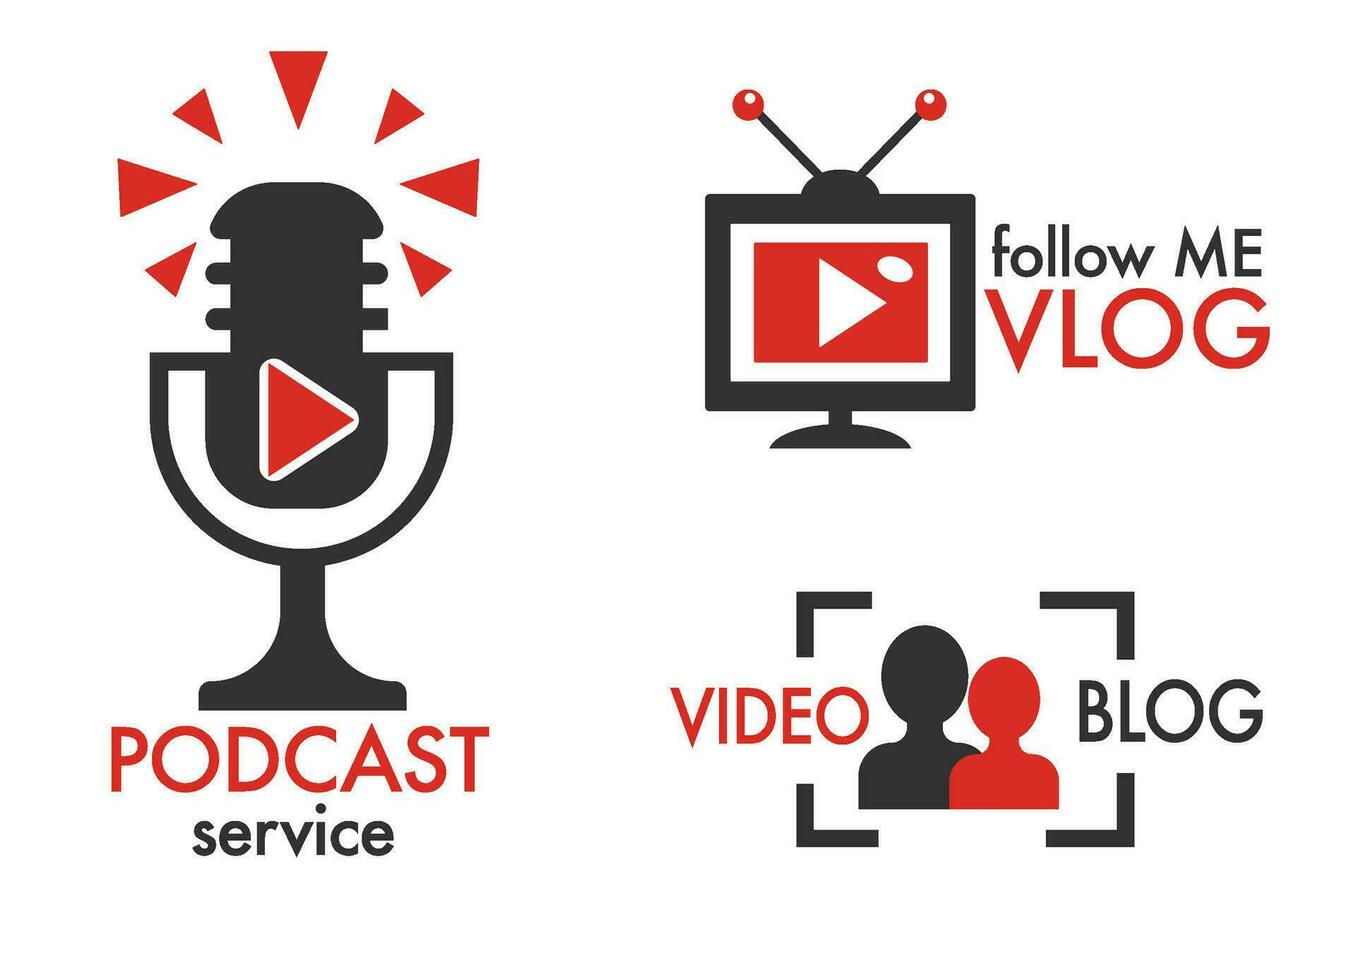 Podcast service, follow me vlog, blog online media vector